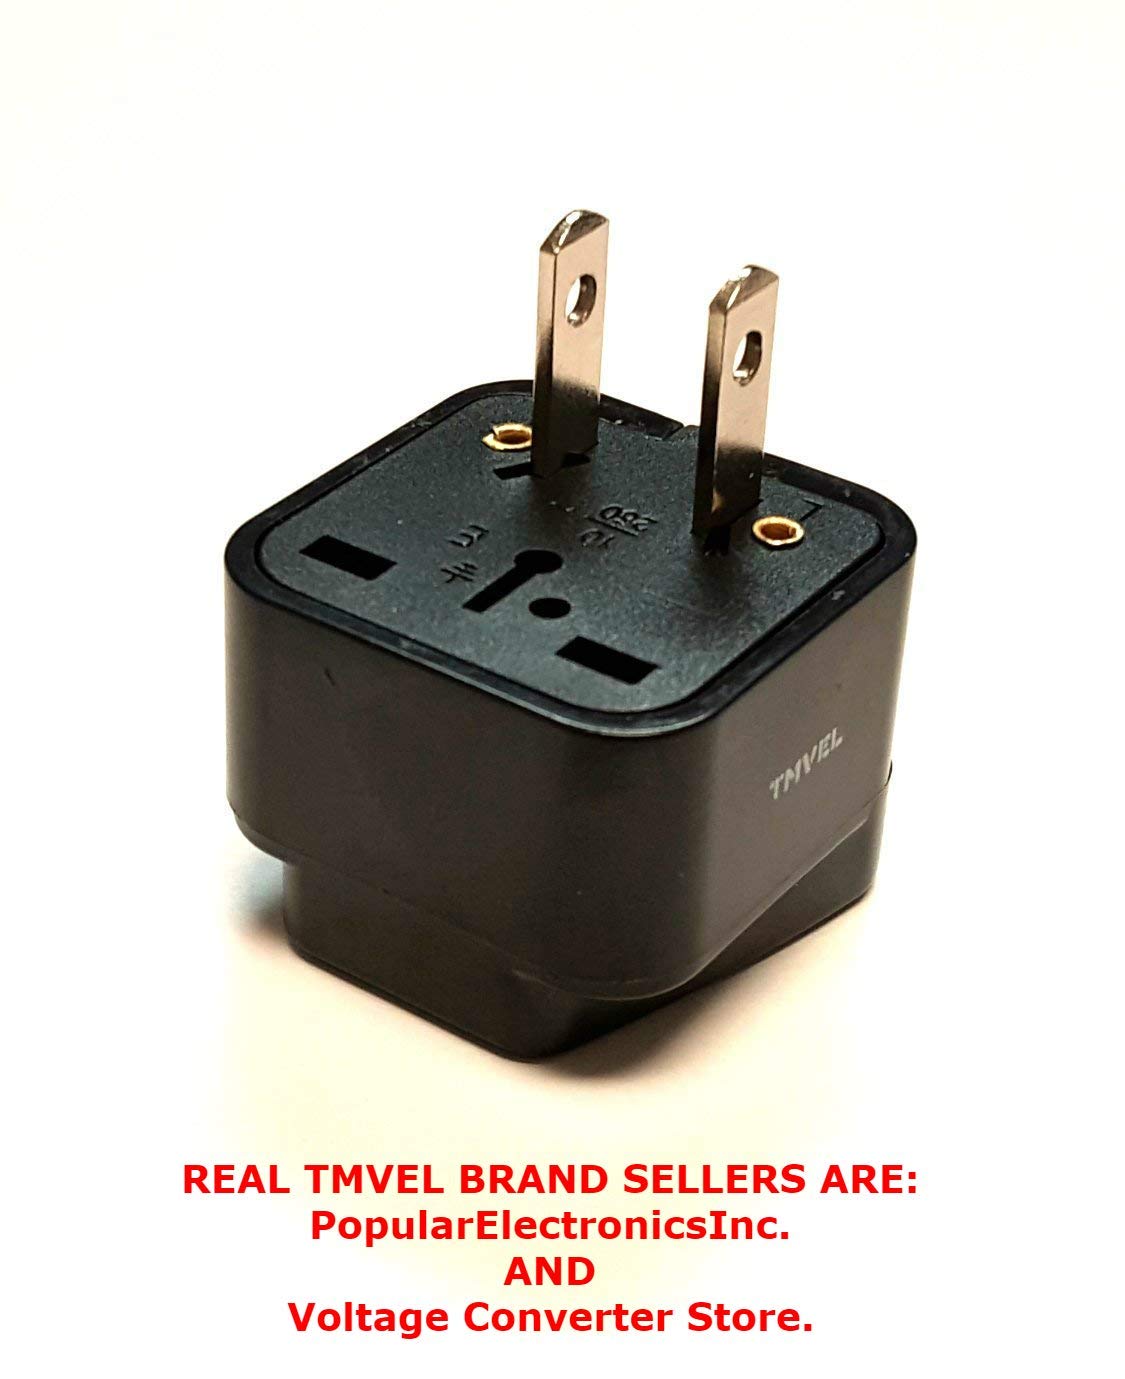 Tmvel Universal International Power Adapter Plug Tip Converter - Convert Europe, EU/UK/CN/AU To USA - Great for Cell Phone Charger - Not Converter